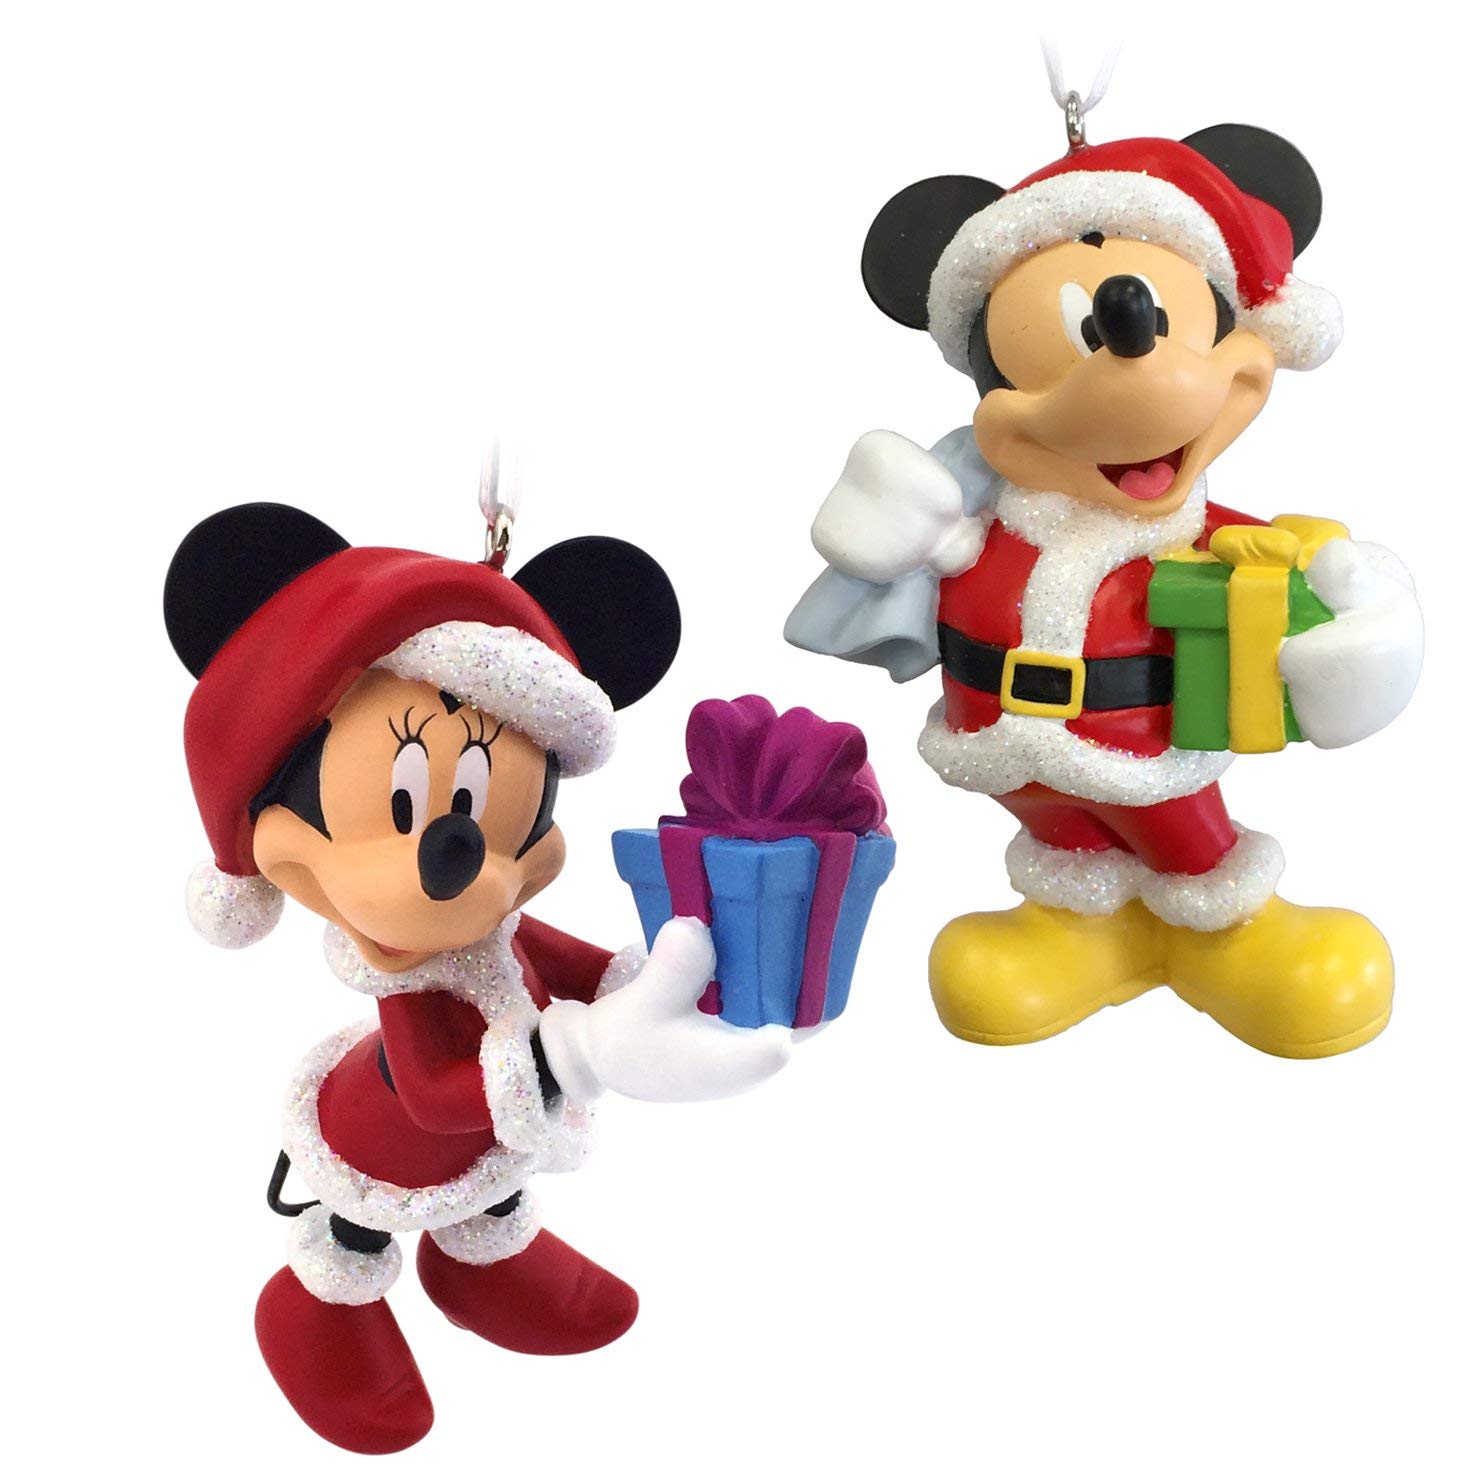 Amazon.com: Hallmark Disney Mickey Mouse and Minnie Mouse Santa ...